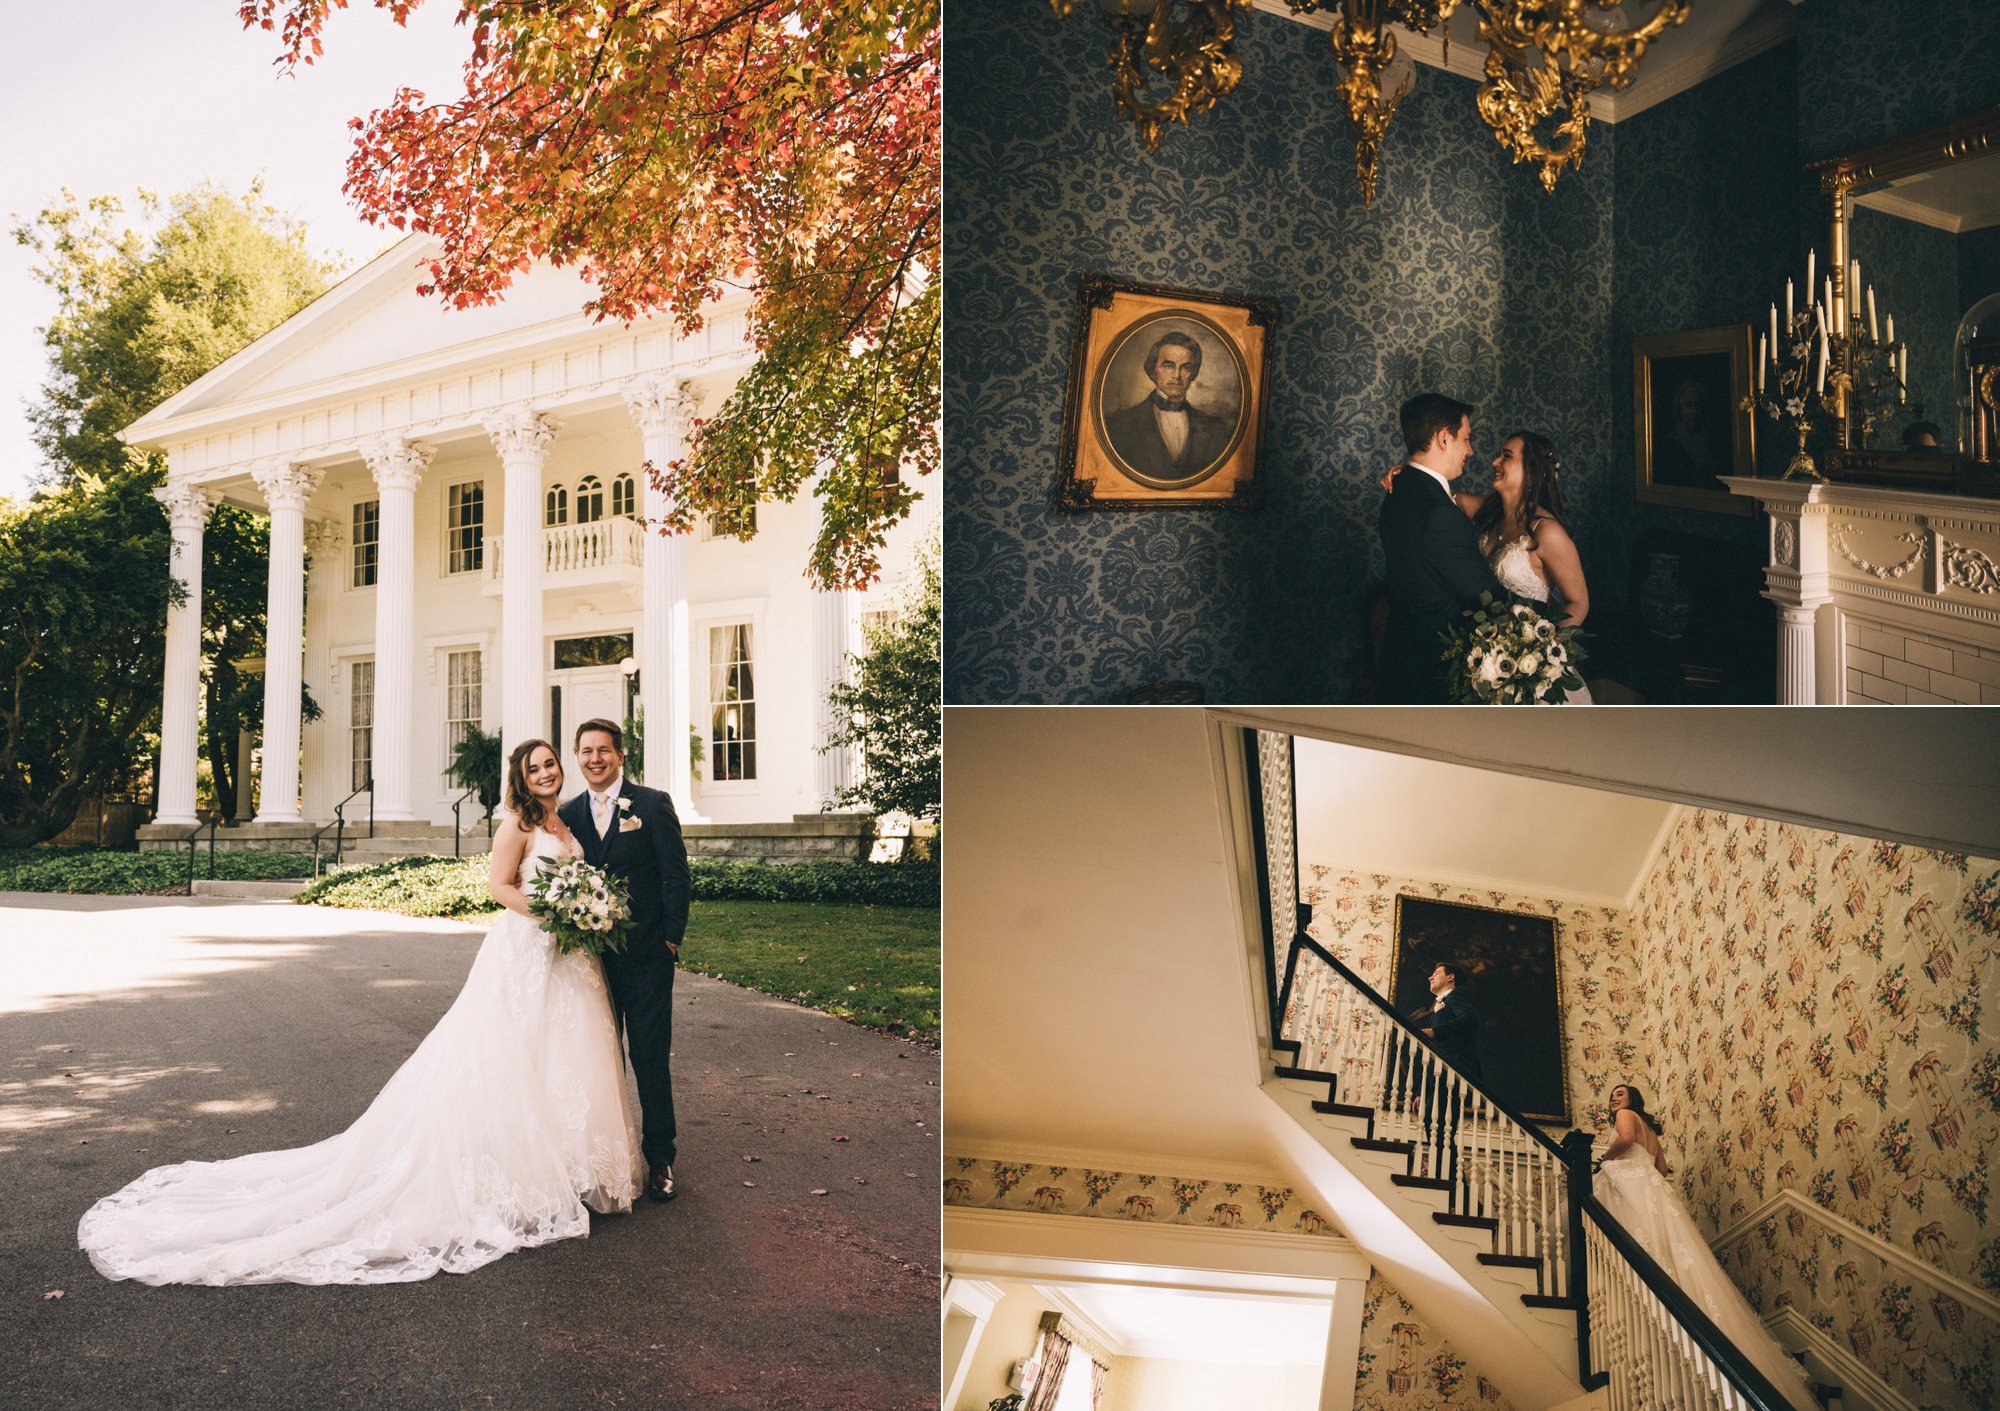 Whitehall-House-Gardens-Romantic-European-Historic-Louisville-Kentucky-Wedding-Venue